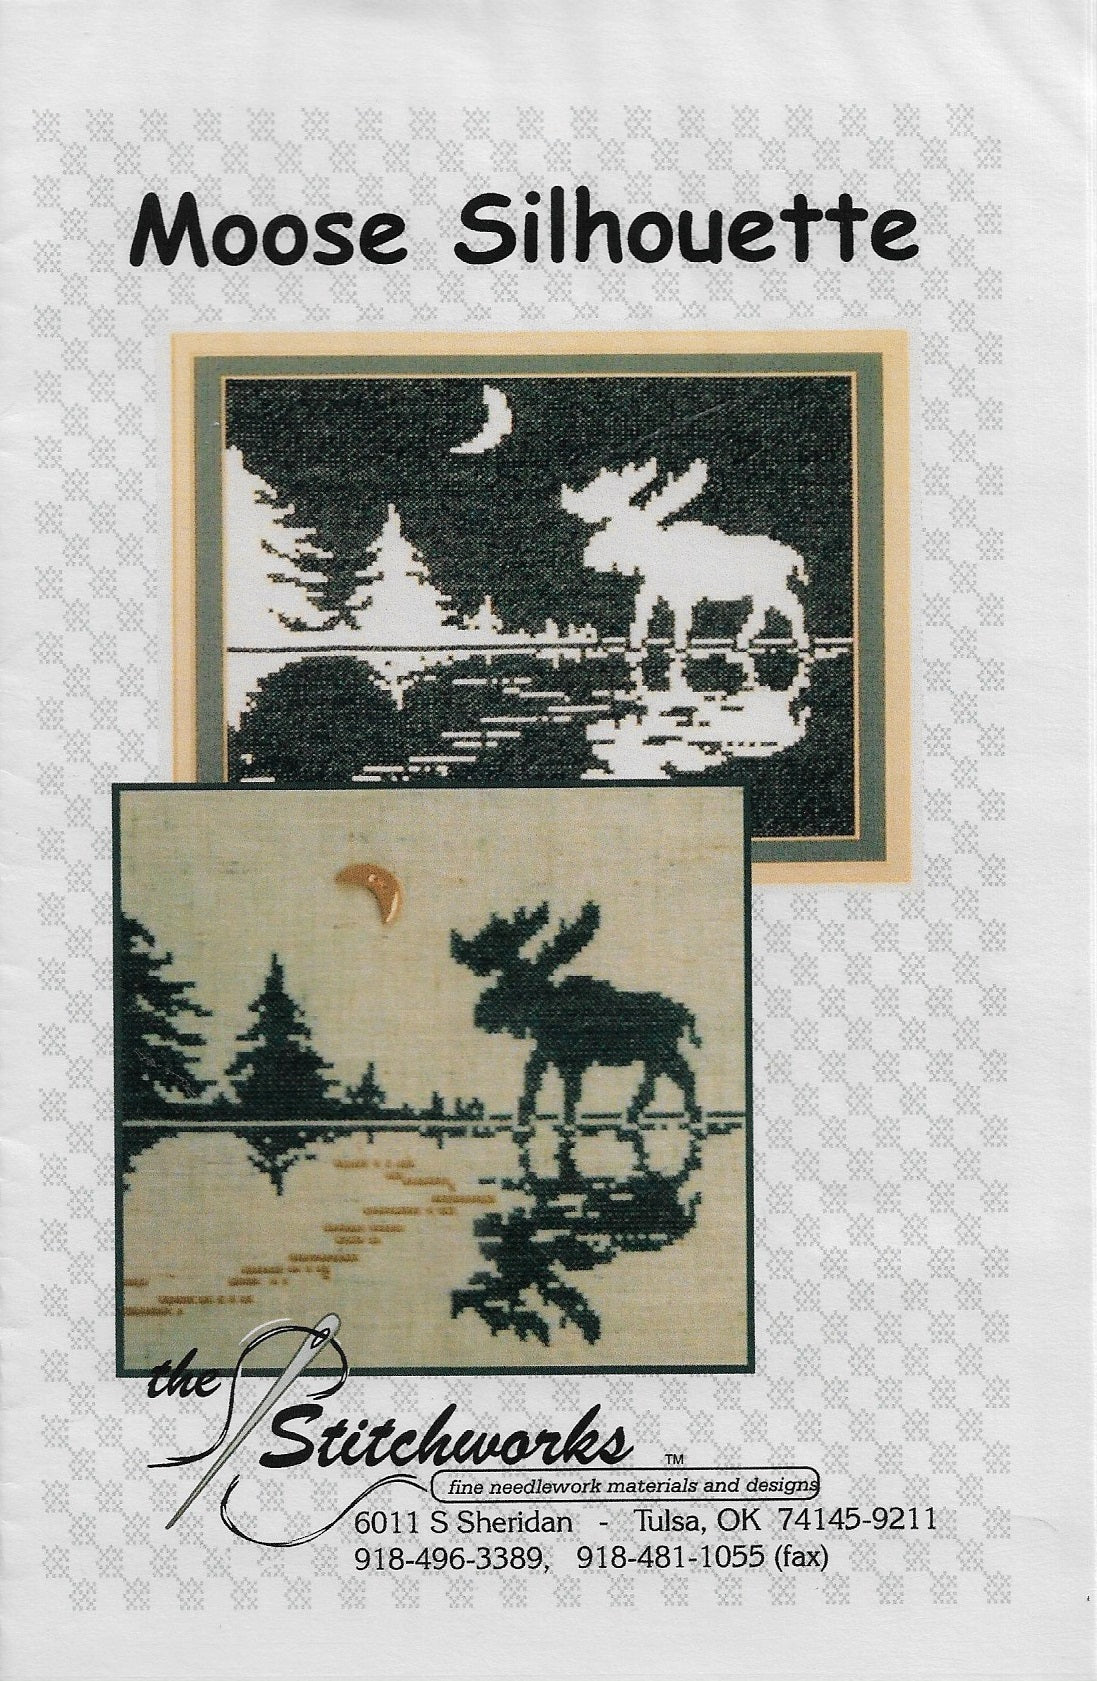 Stitchworks Moose Silhouette cross stitch pattern